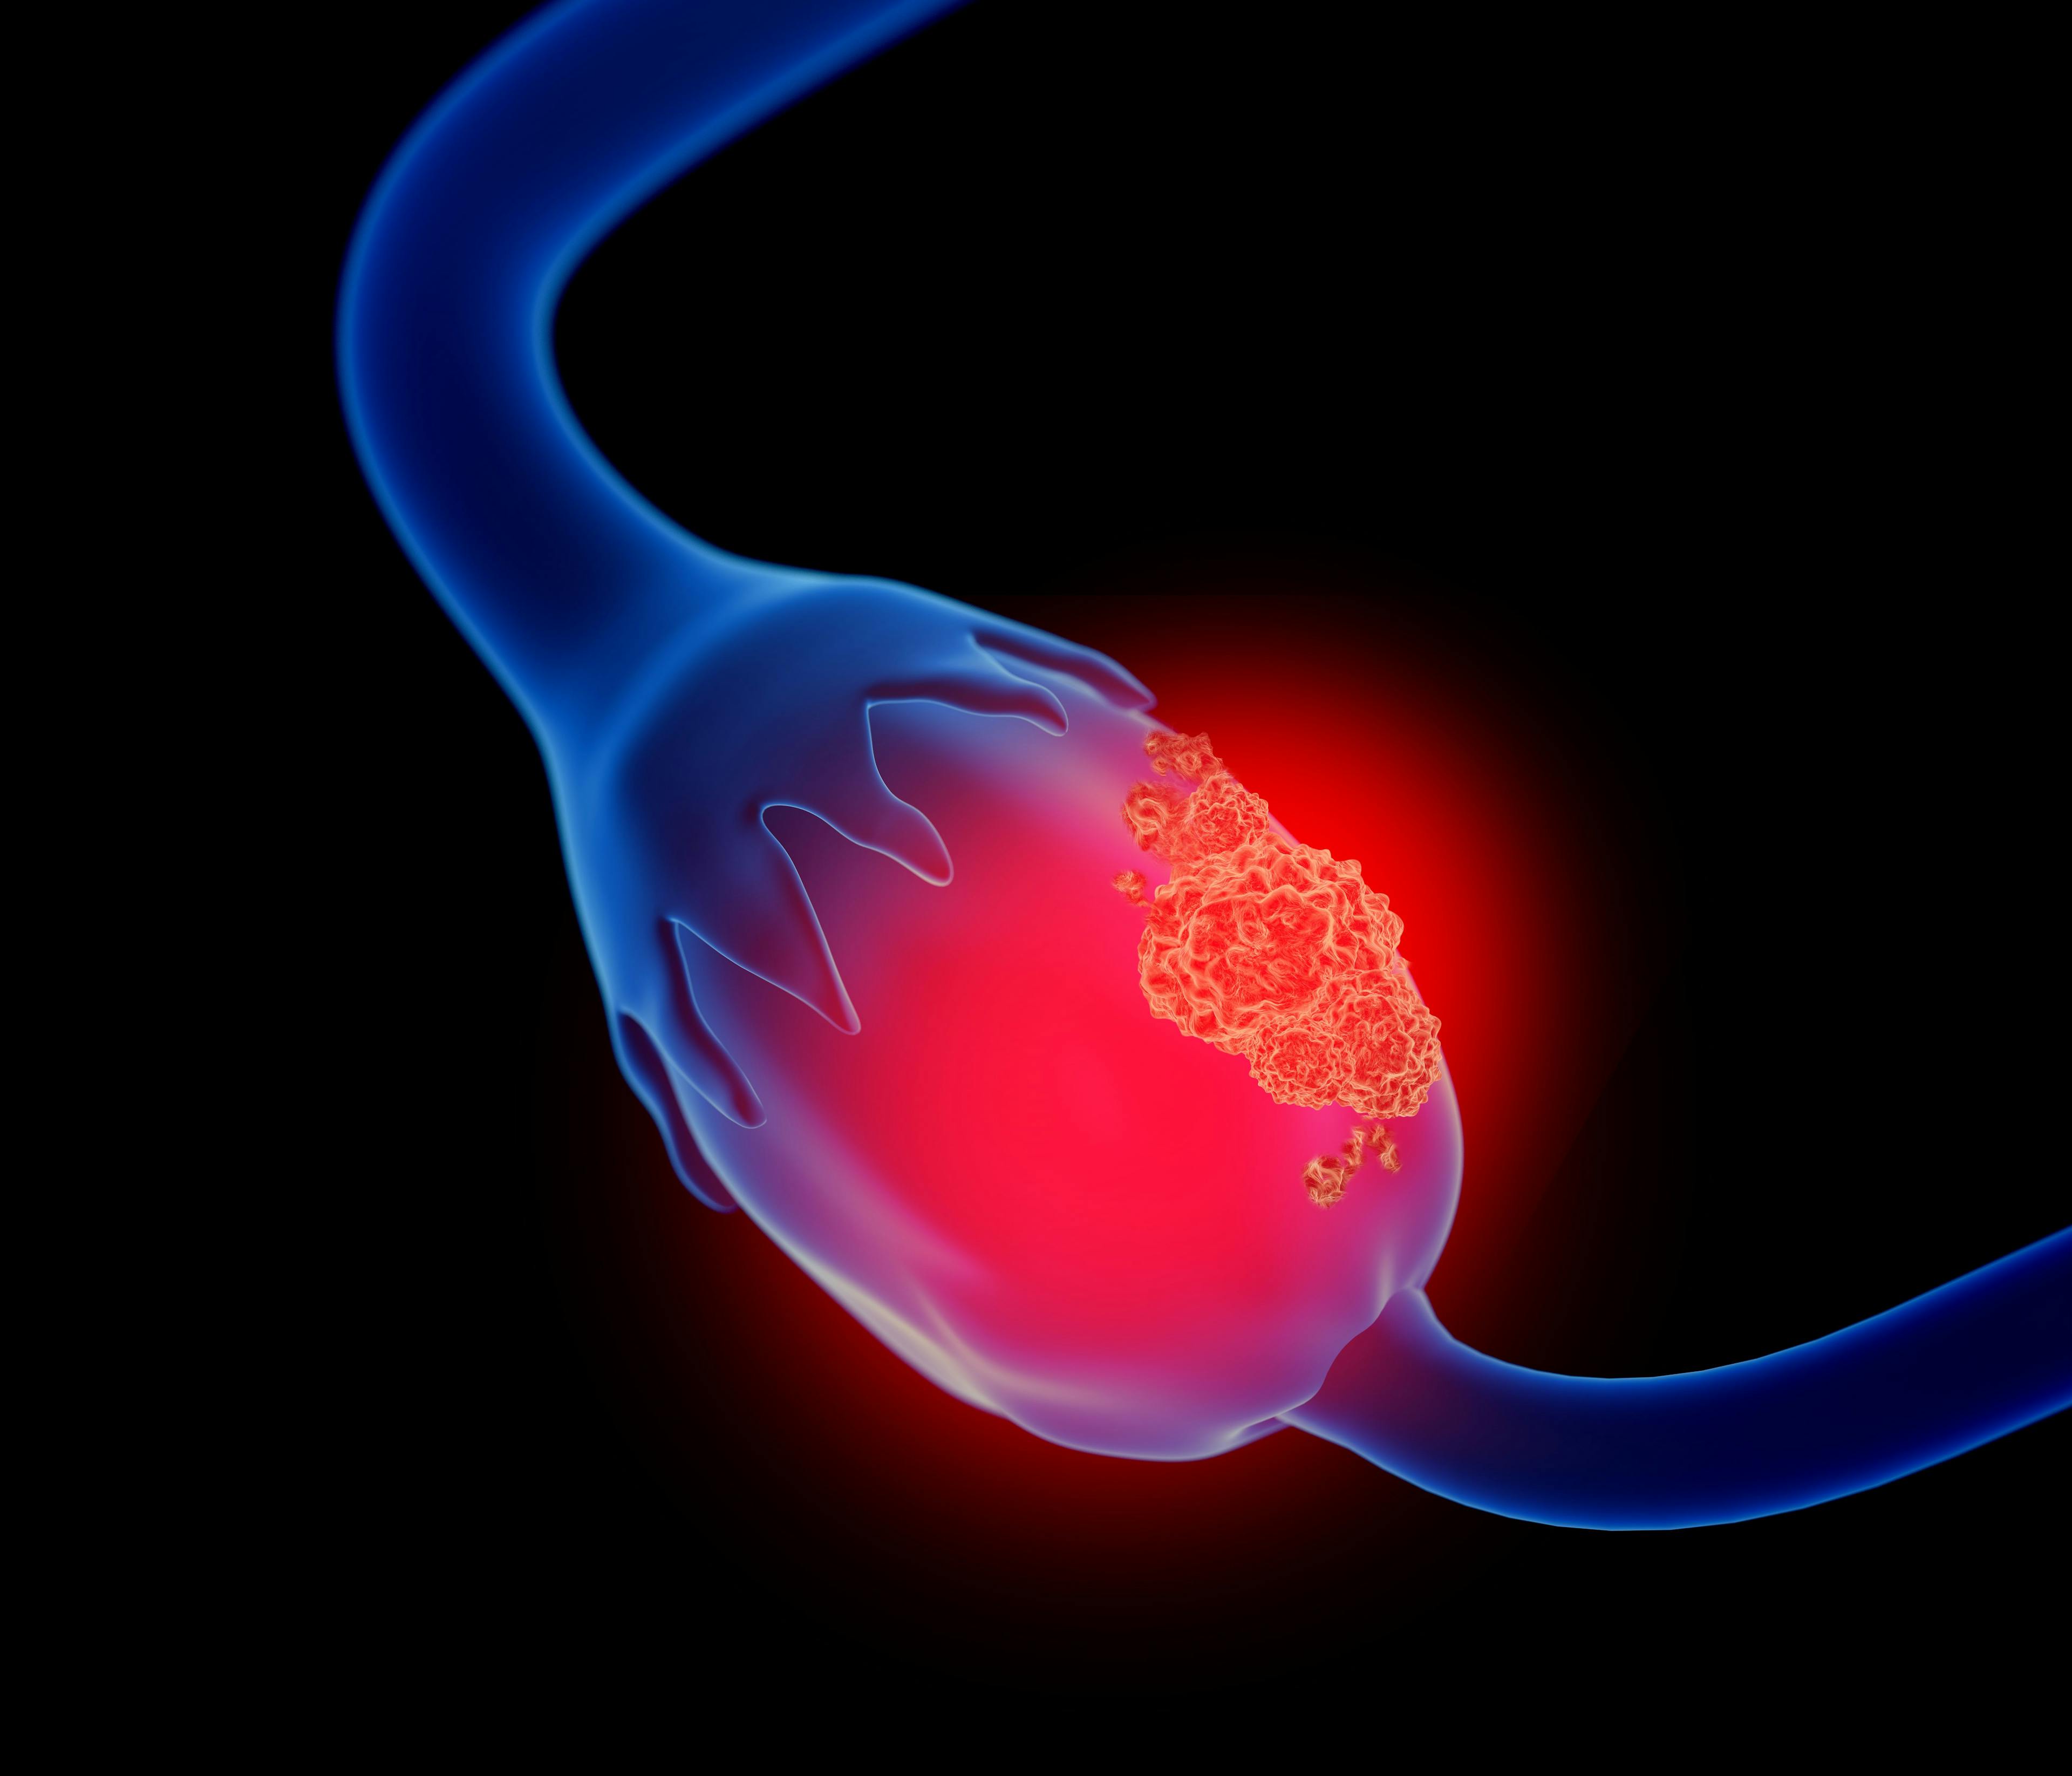 Ovarian cancer | Image Credit: Lars Neumann – stock.adobe.com